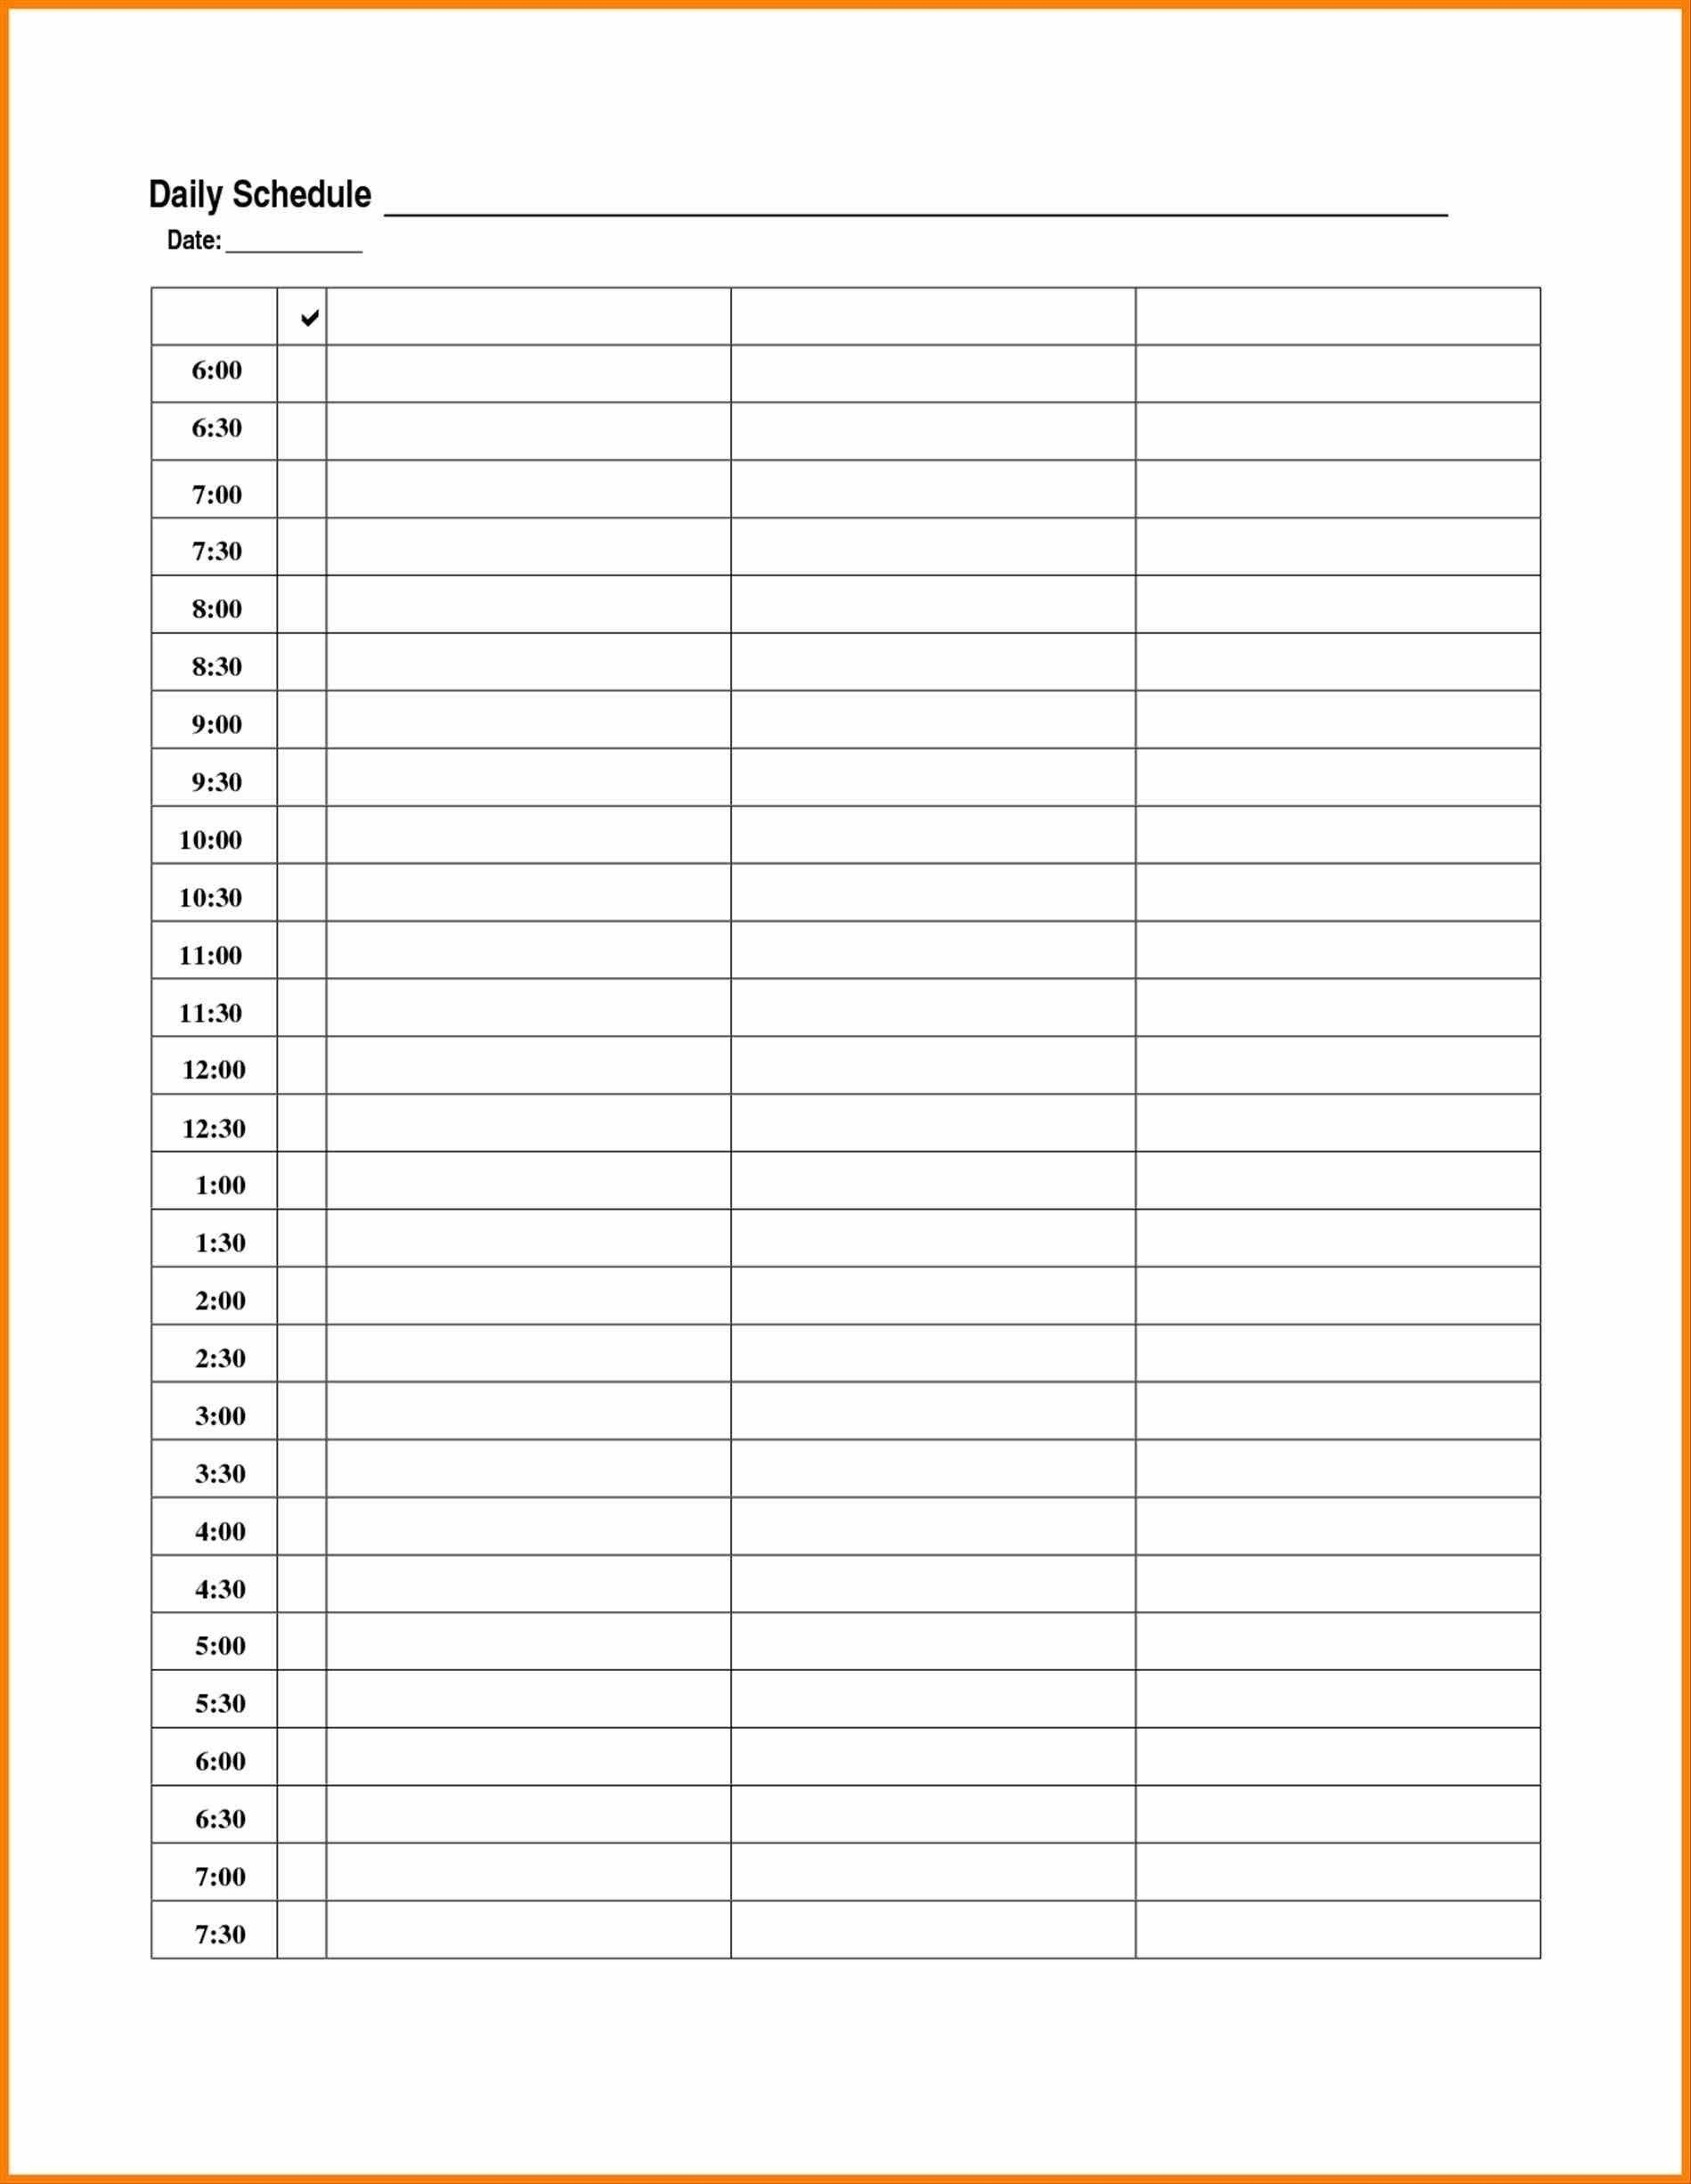 Daily Calendar Excel Template Free Printable | Monthly Calendar Daily Calendar Template 30 Minute Increments